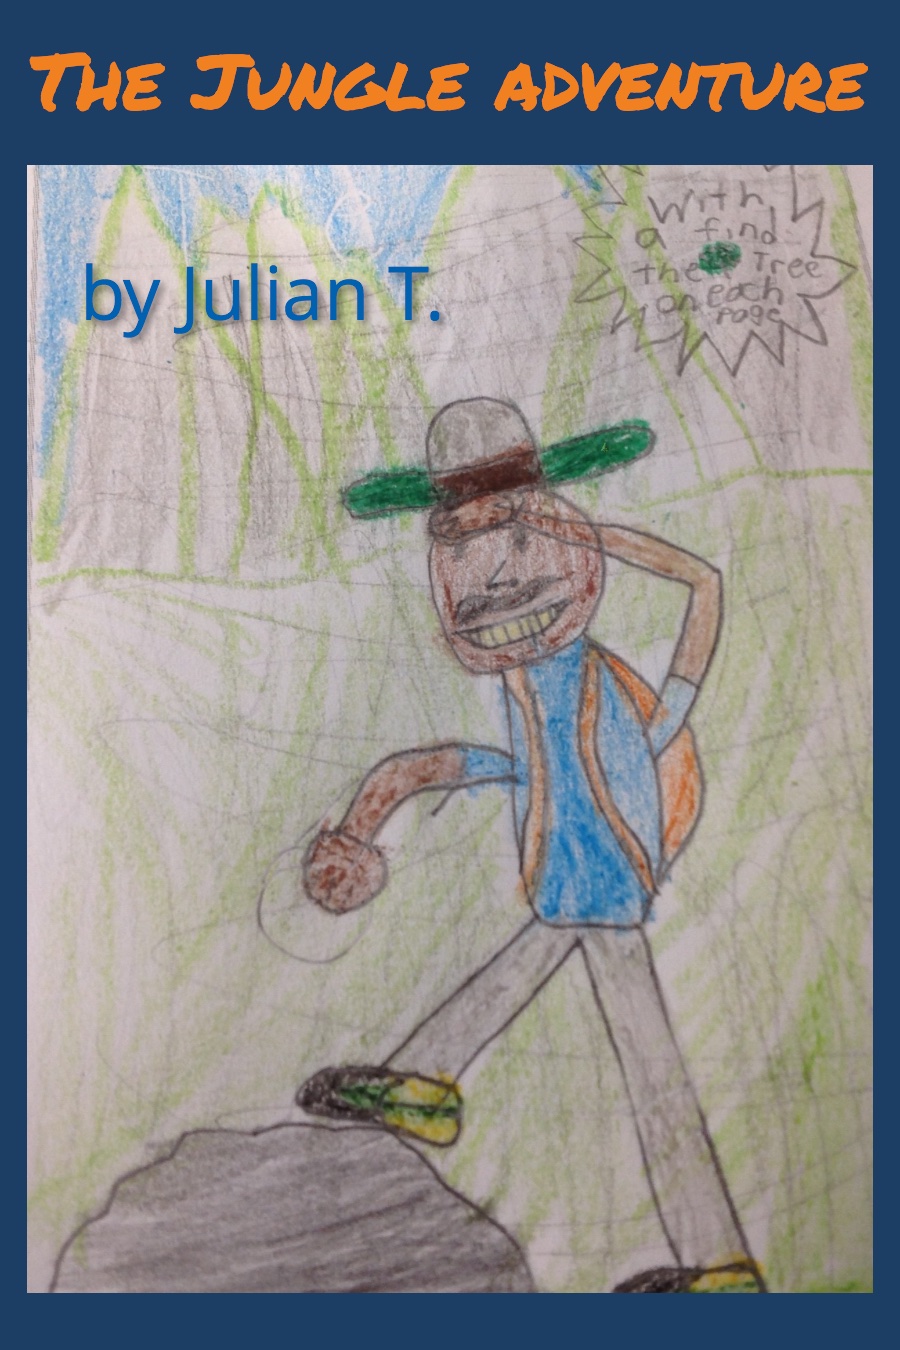 The Jungle Adventure by Julian T